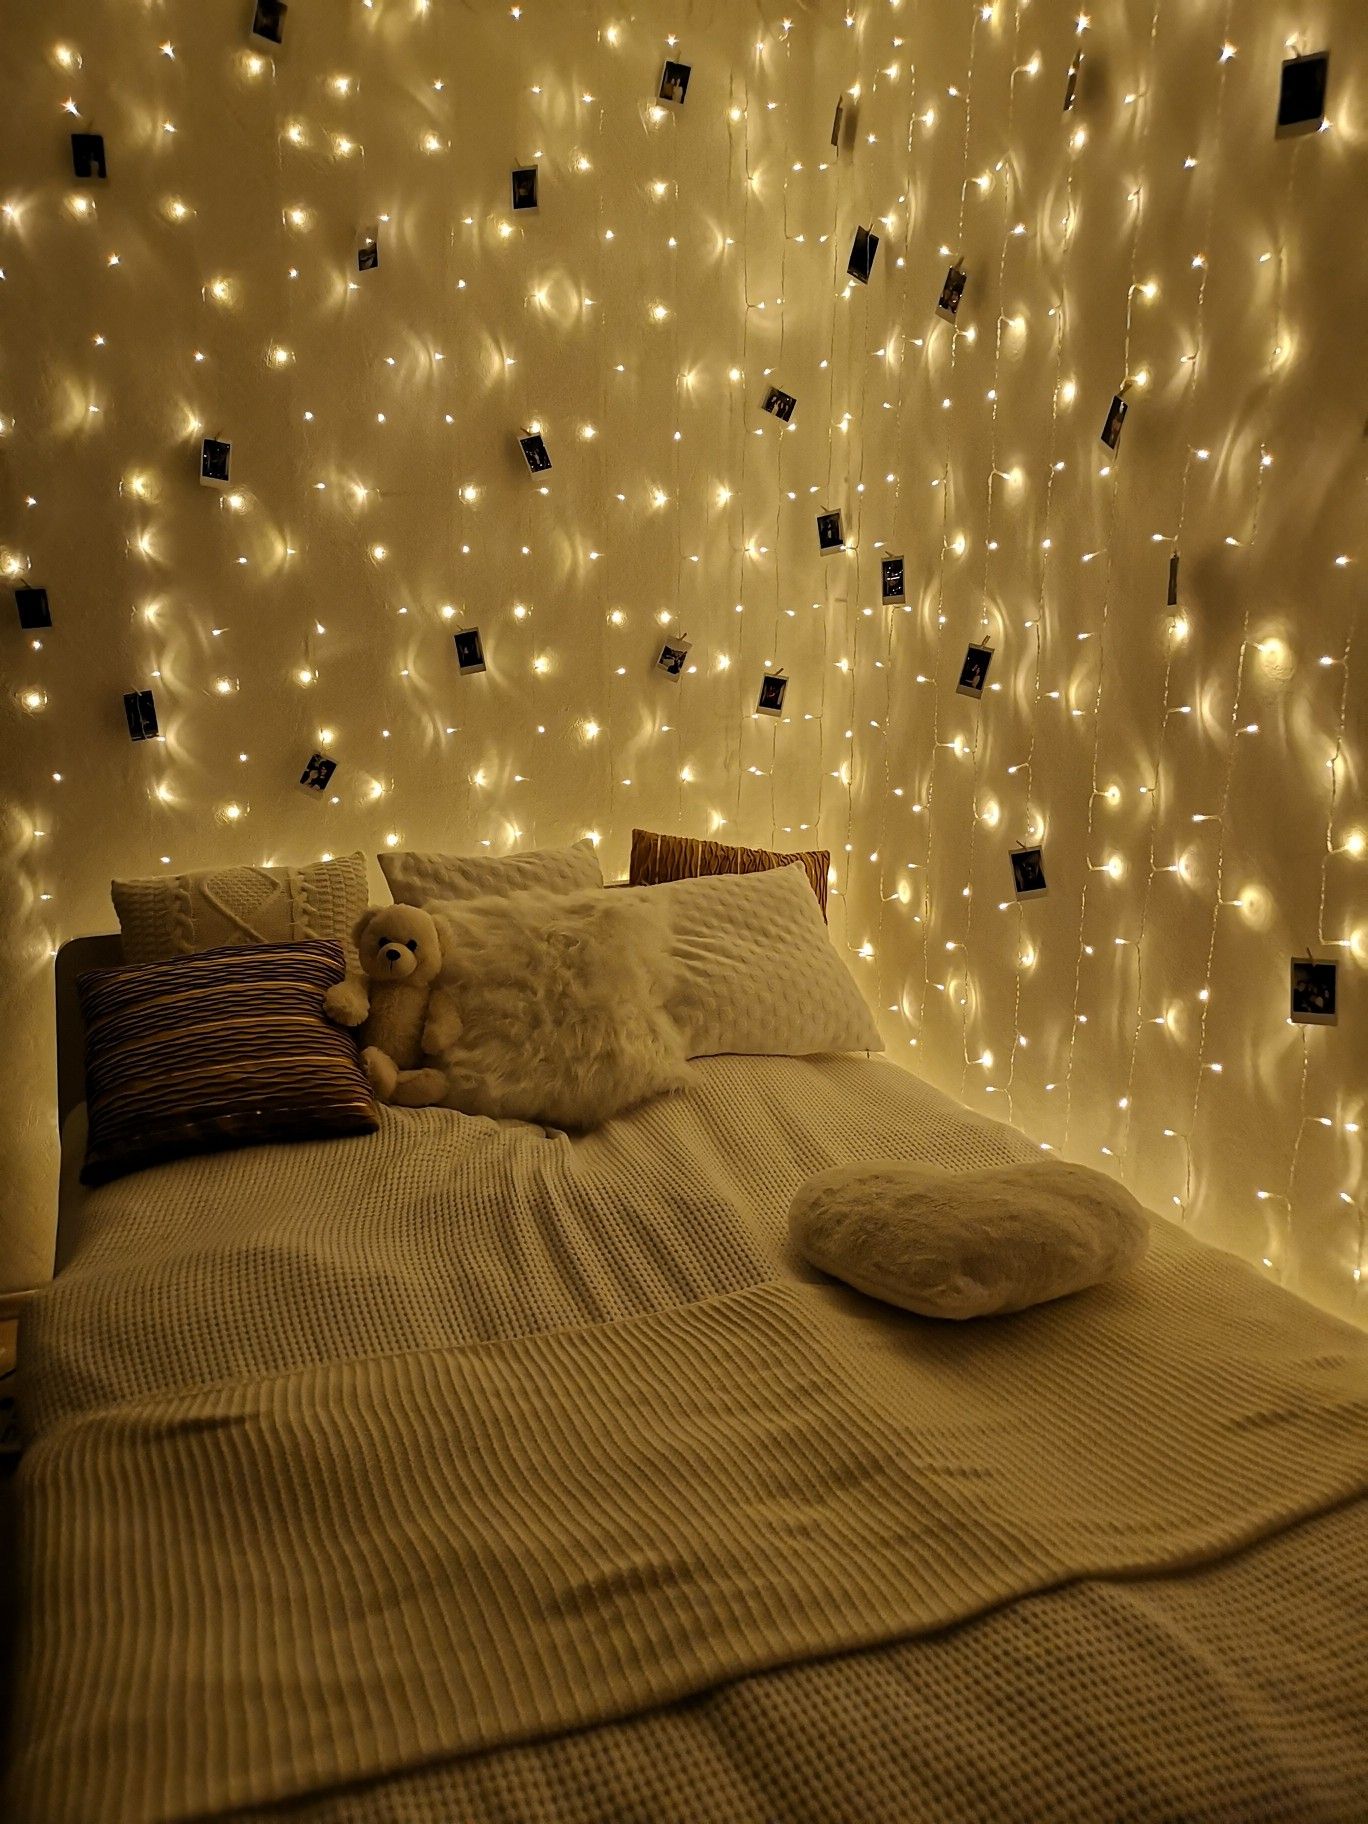 Fairy lights decoration ideas